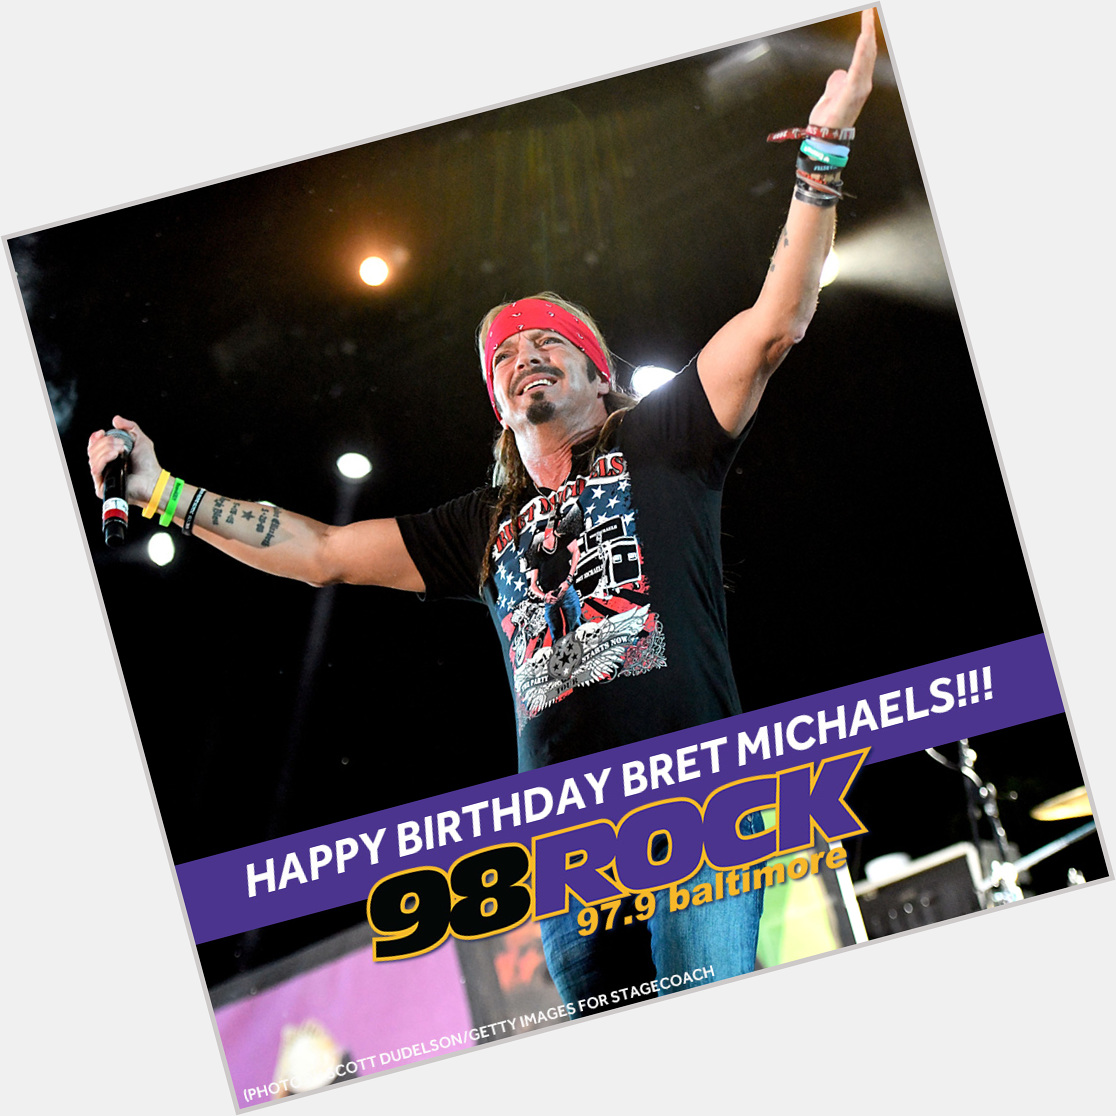 Happy 60th birthday to Poison singer Bret Michaels!  